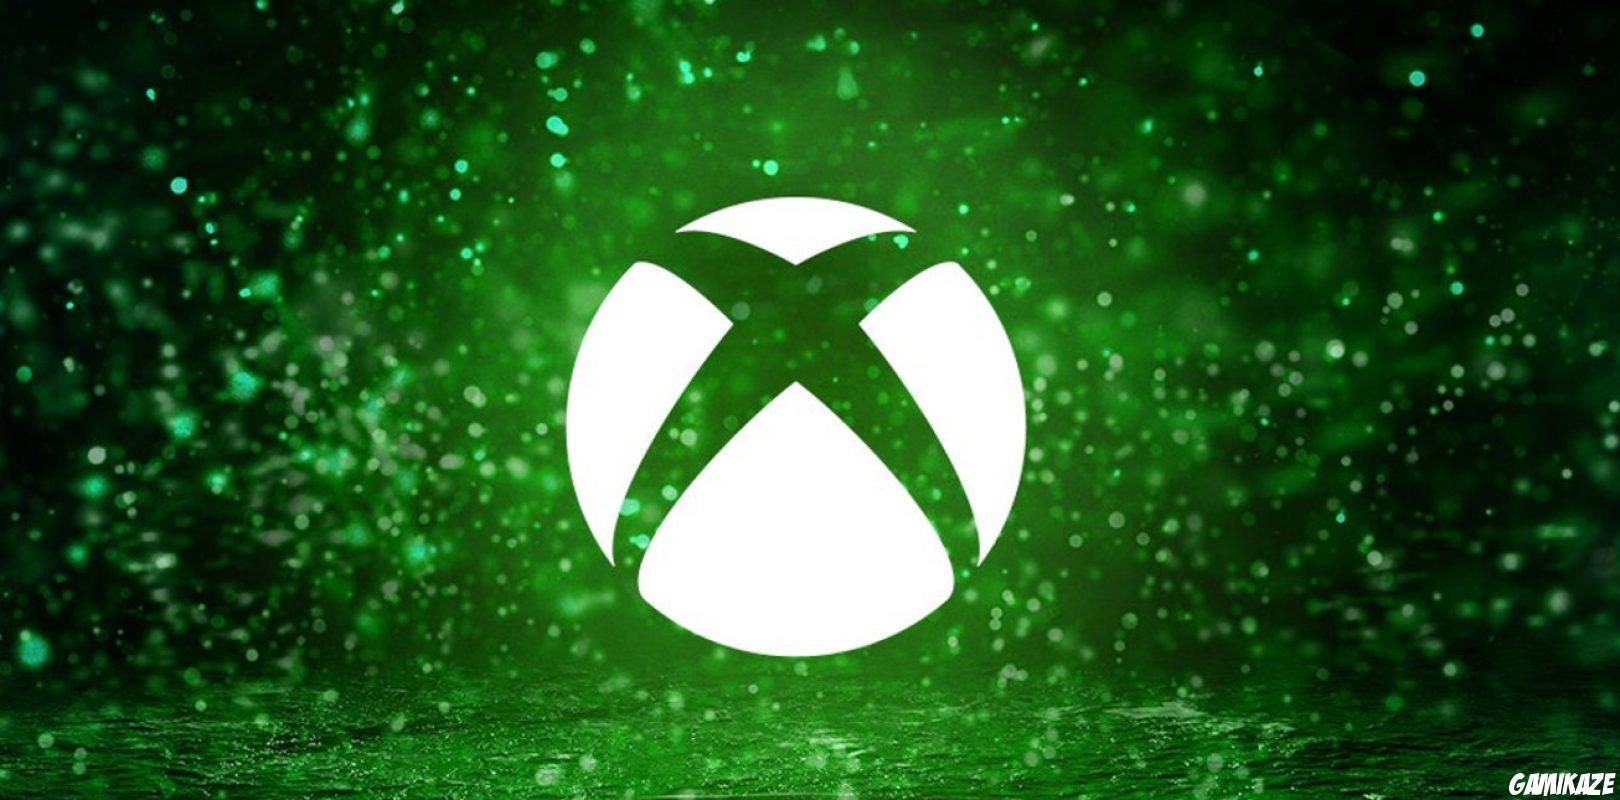 xseriesx - Xbox Serie X 